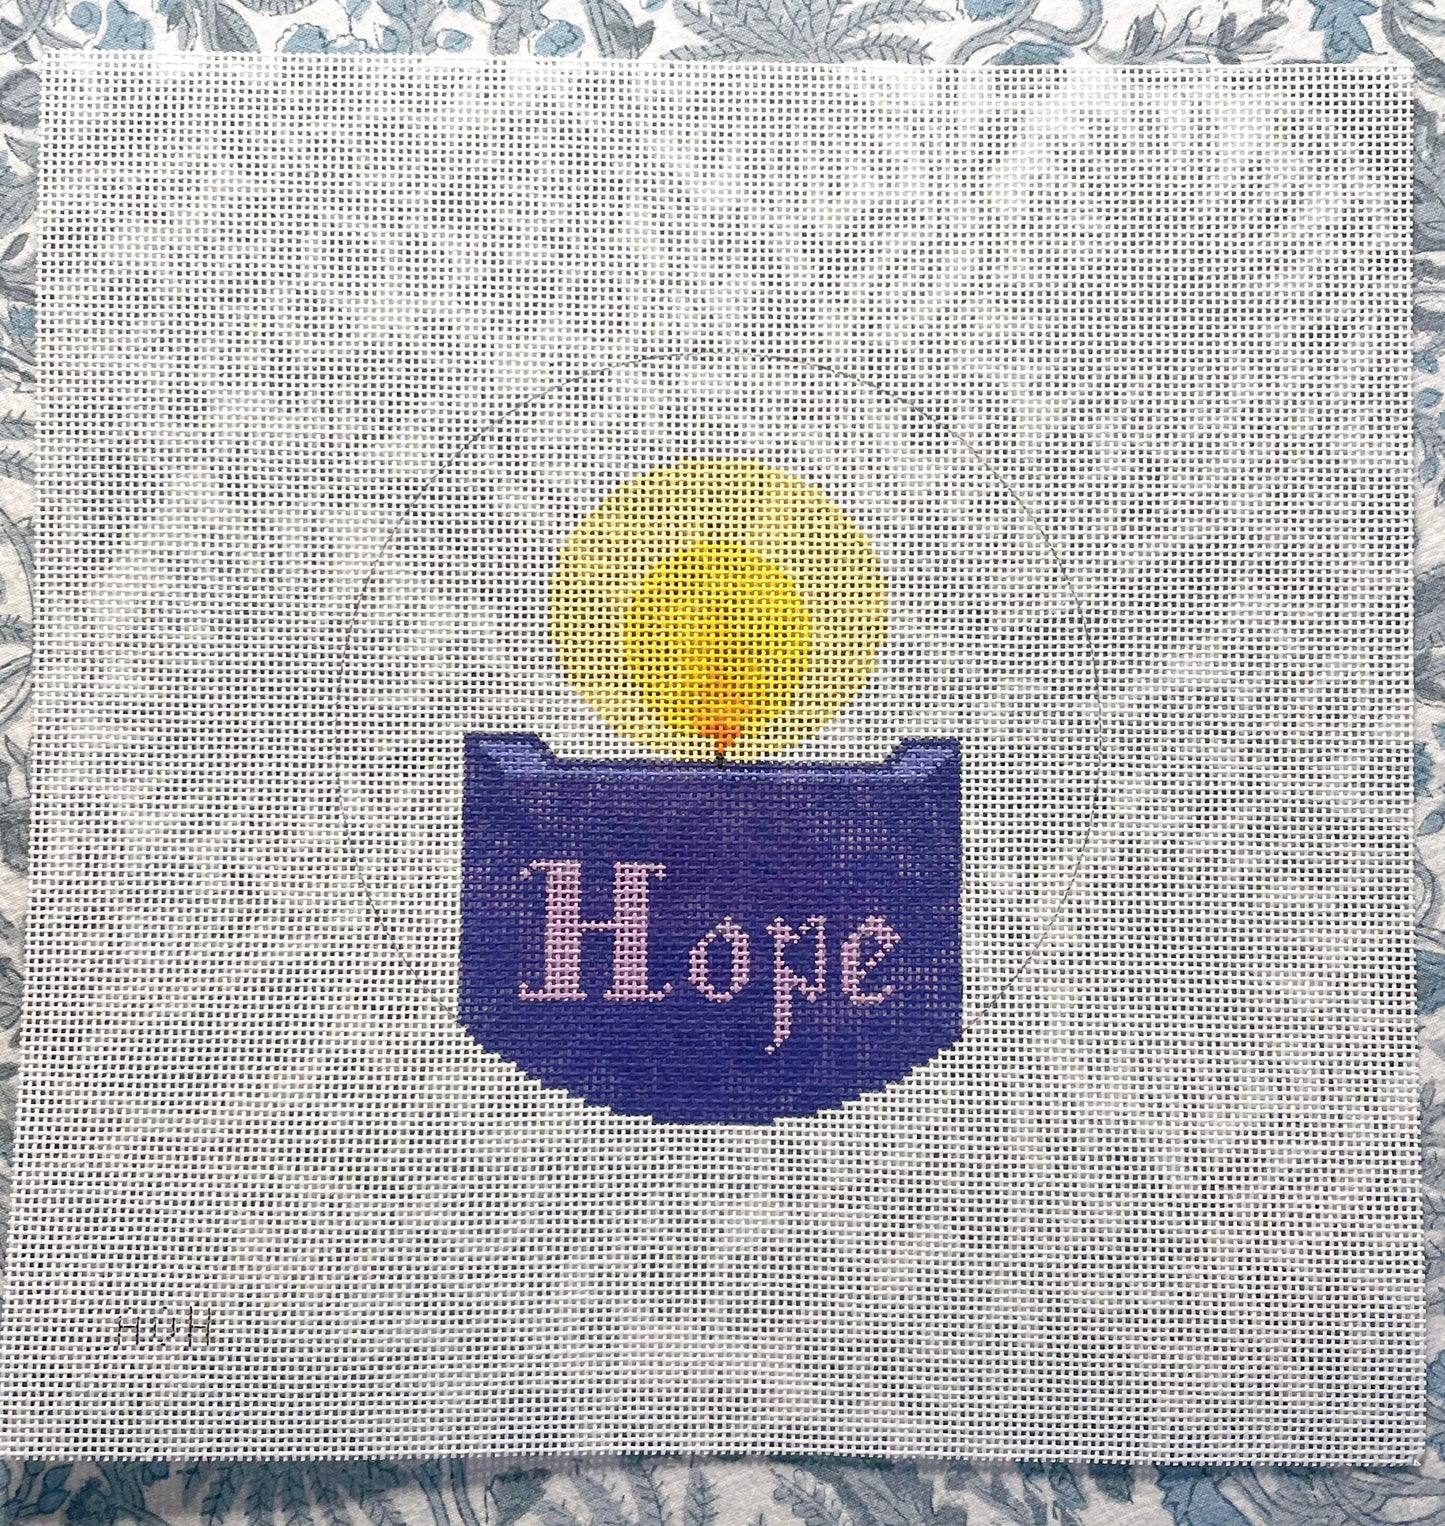 hope - advent